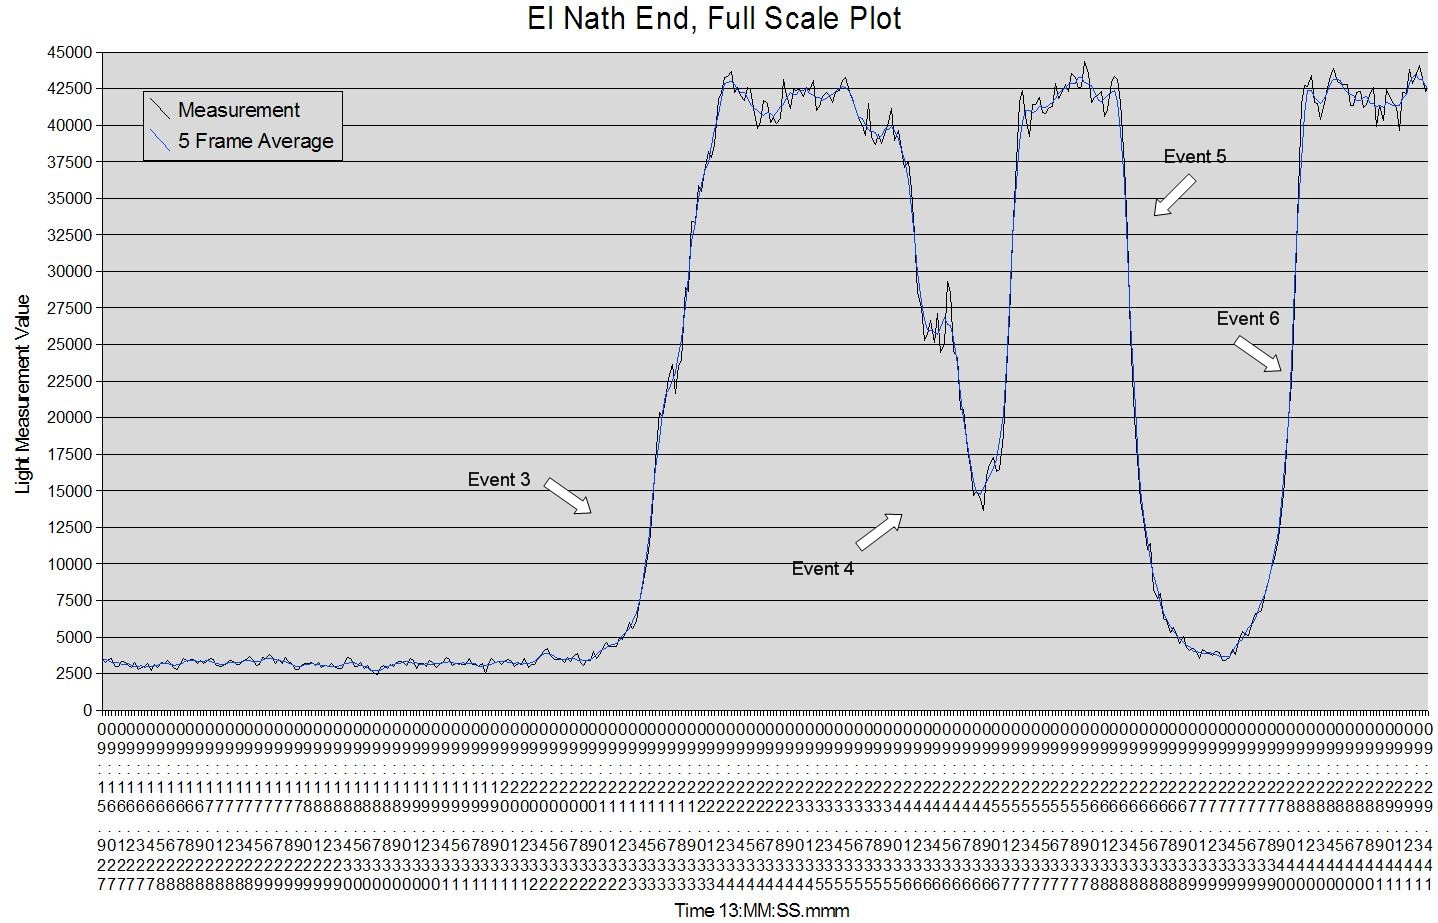 El Nath End -- Full Scale